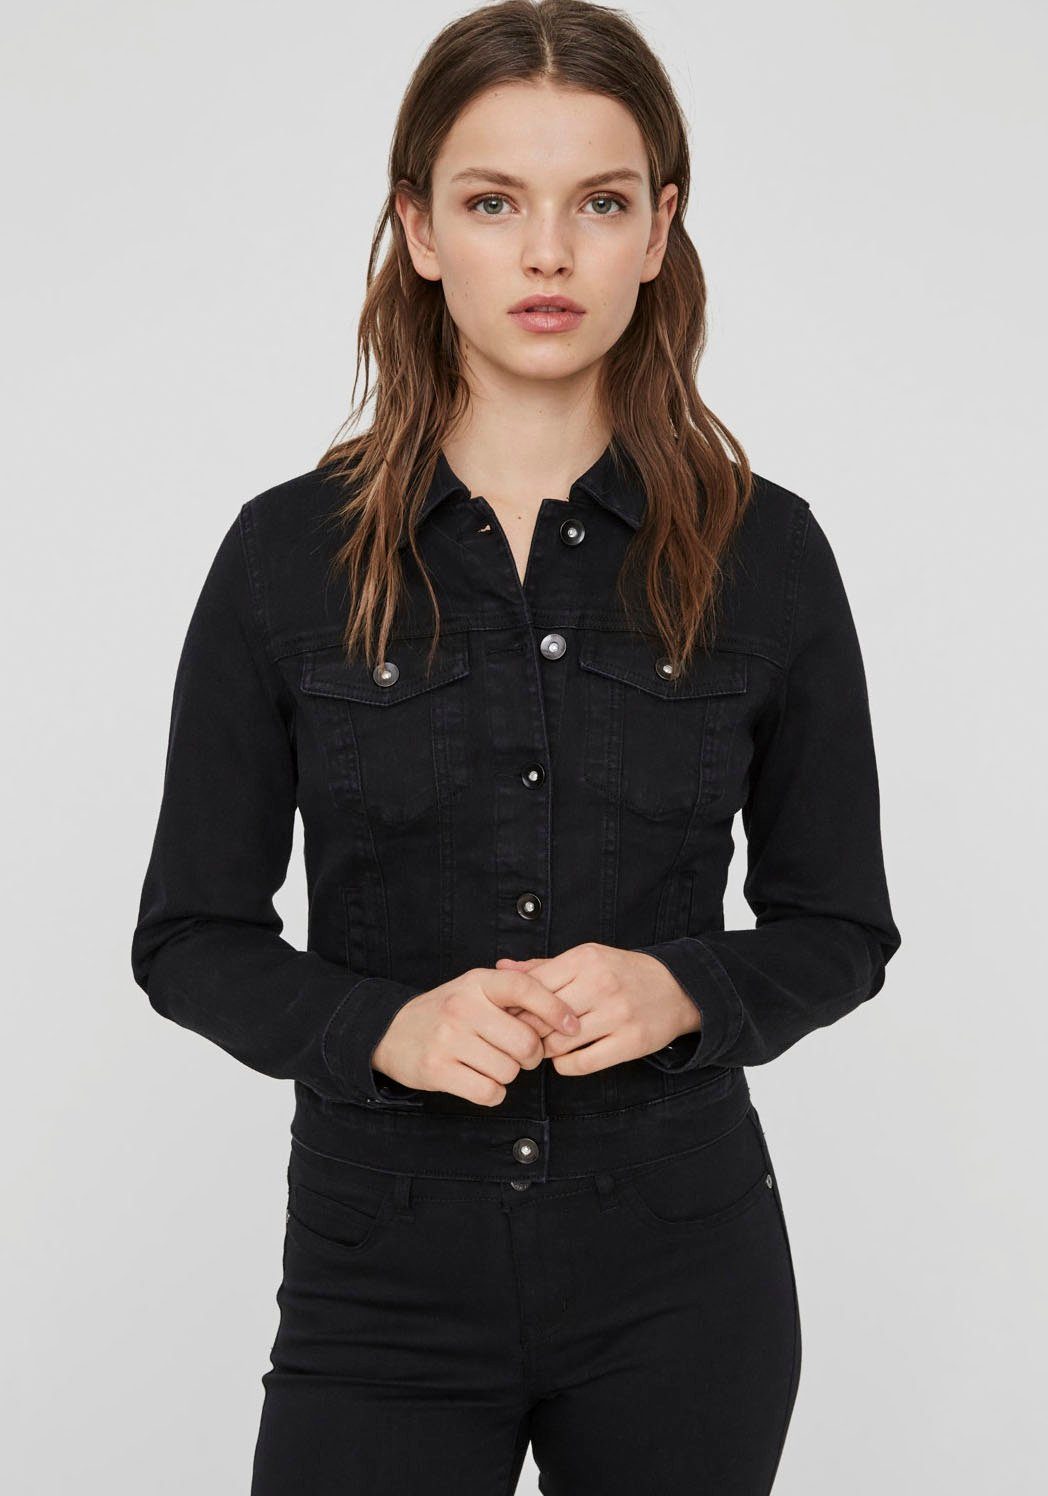 Schwarze Jeansjacke online kaufen | OTTO